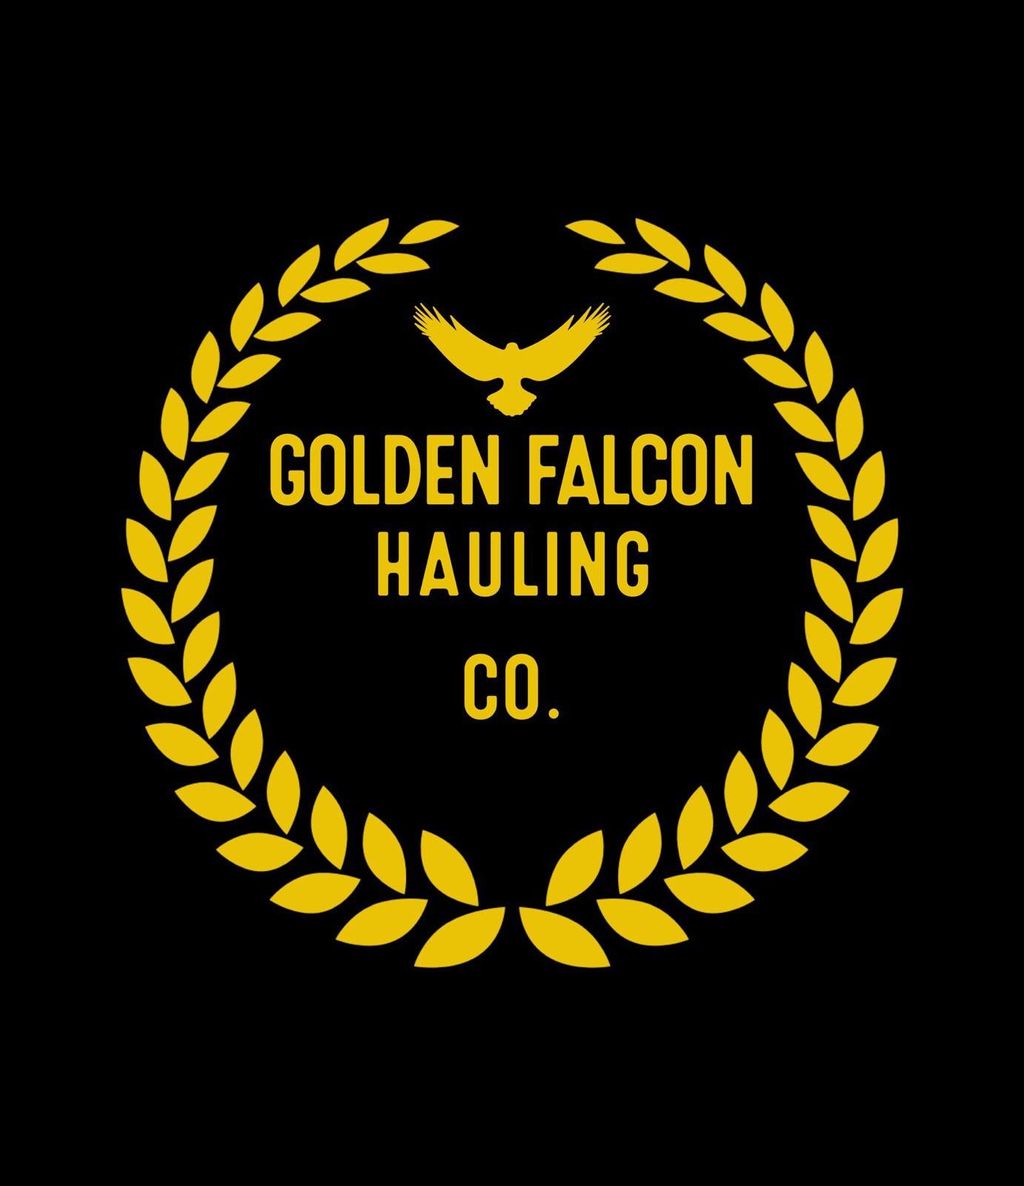 Golden Falcon Hauling Co.